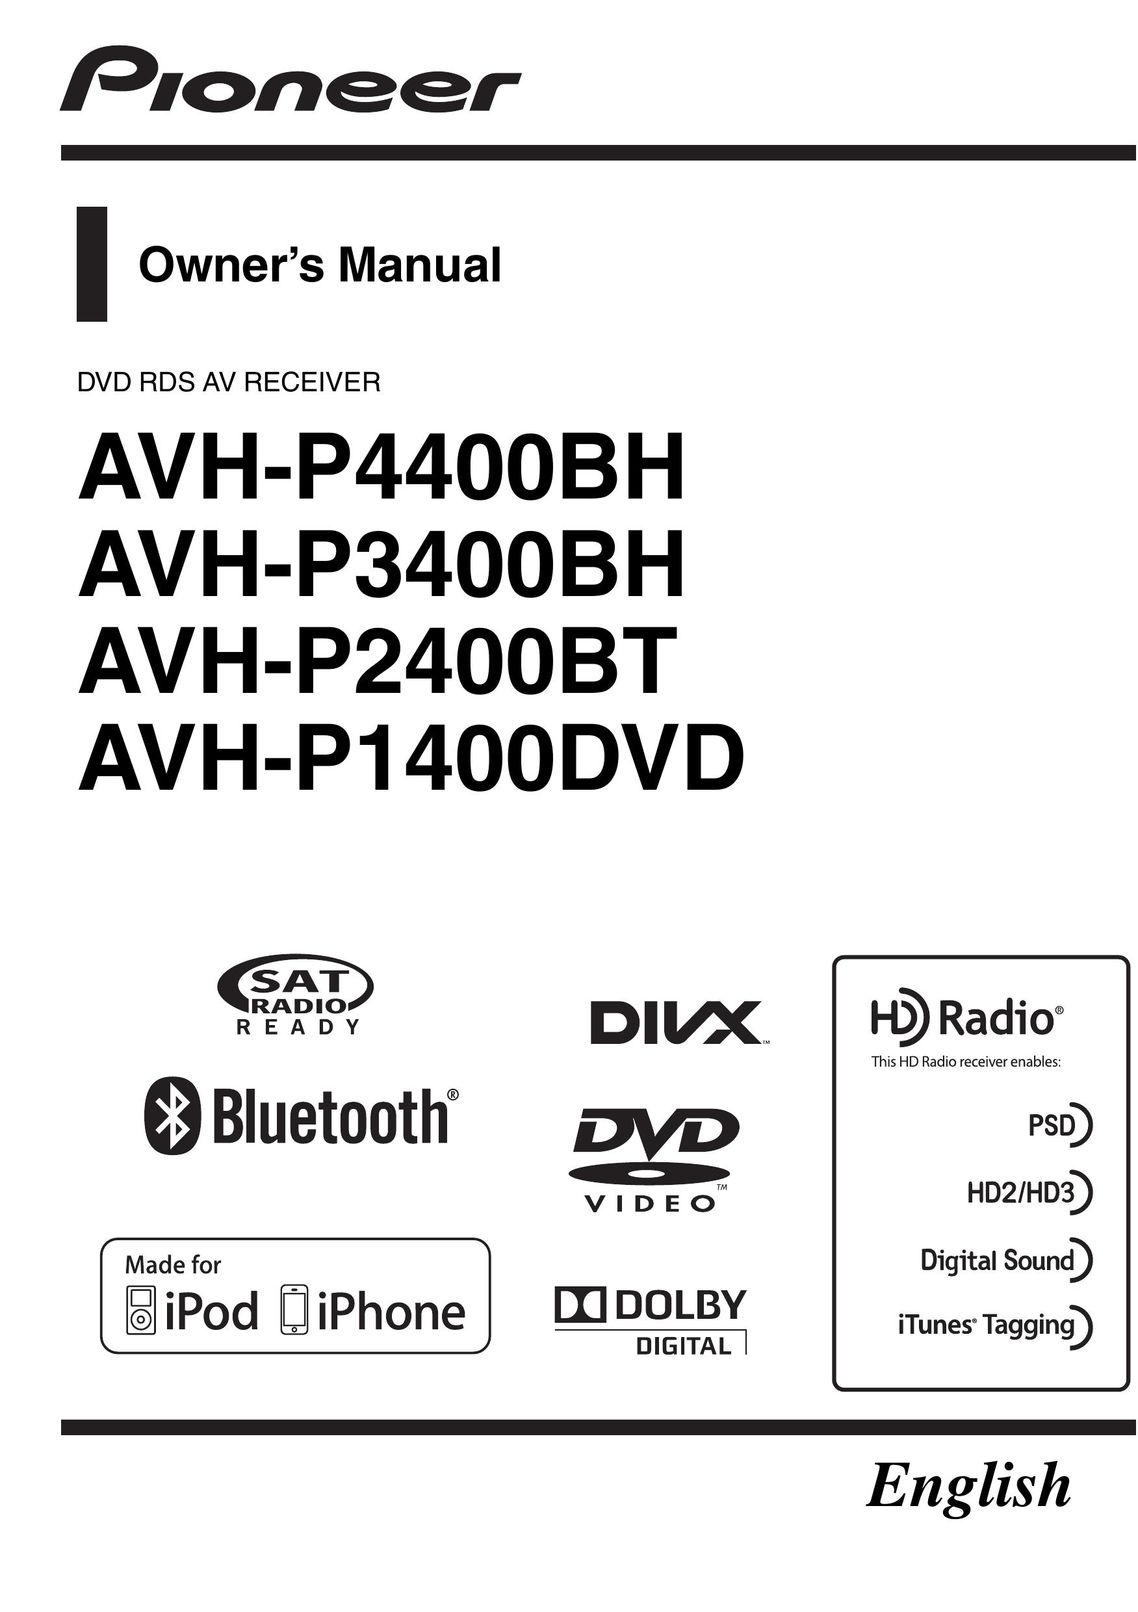 Pioneer AVH-P1400DVD Car Video System User Manual